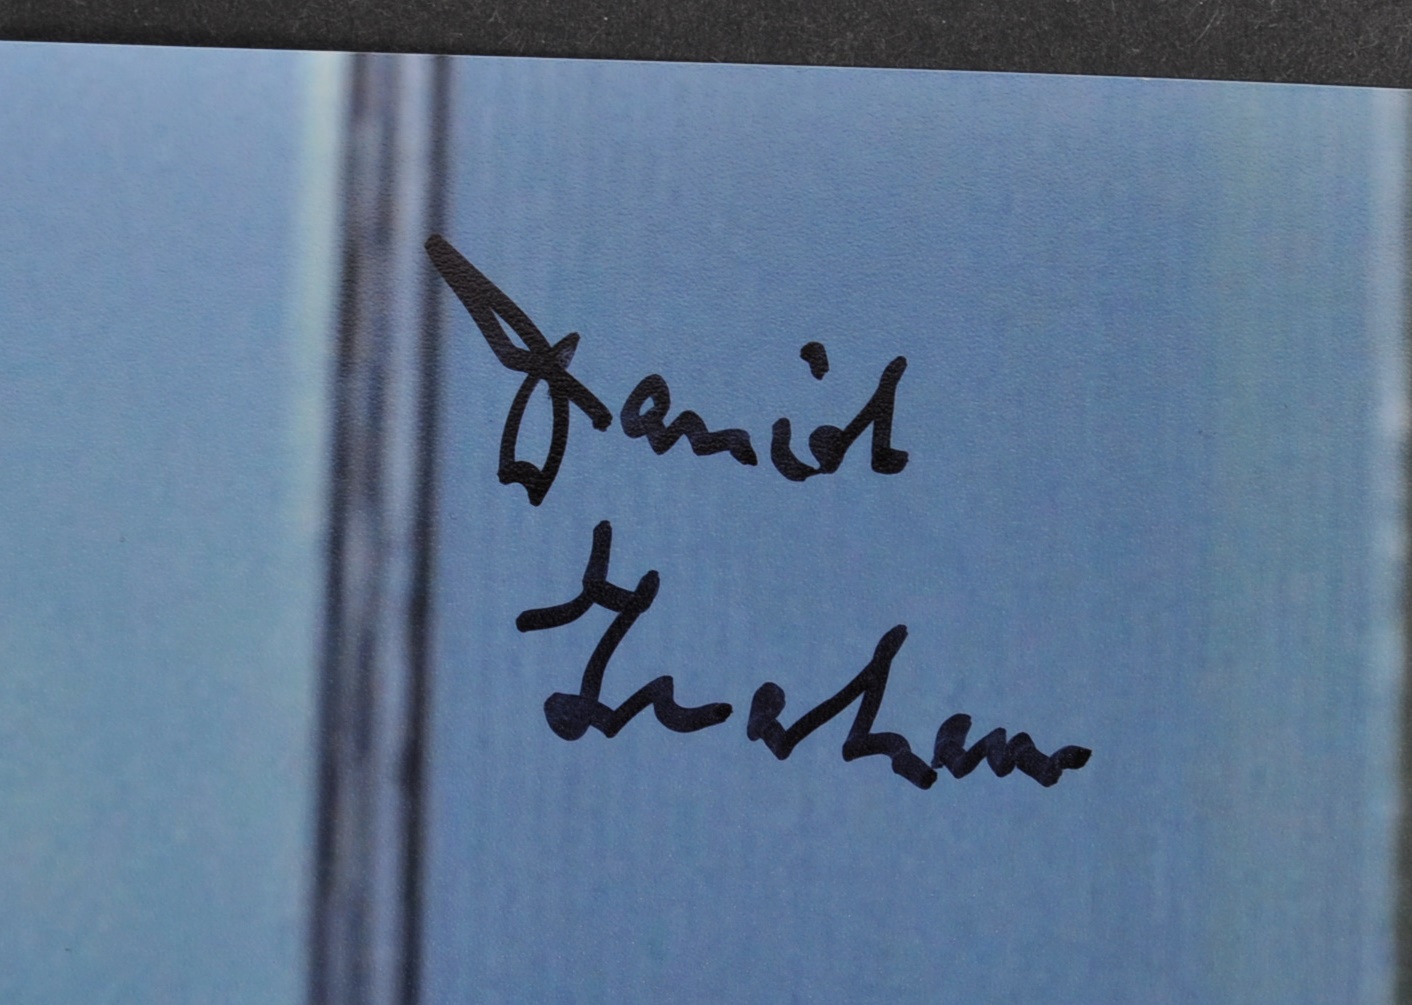 THUNDERBIRDS - DAVID GRAHAM - AUTOGRAPHED 8X10" PHOTOGRAPH - Image 2 of 2